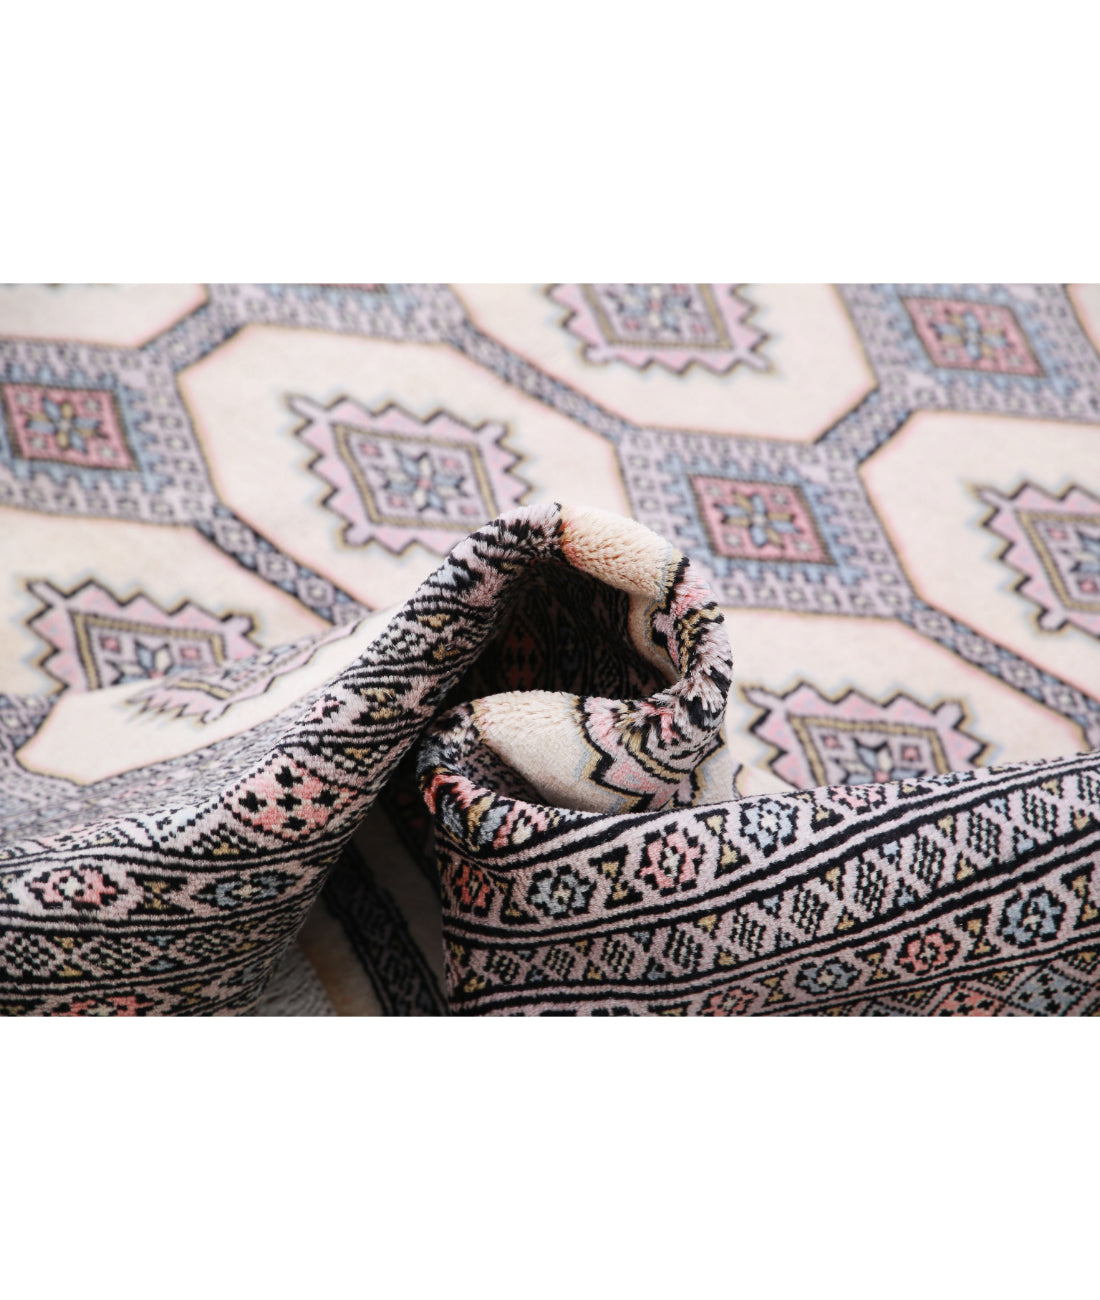 Hand Knotted Tribal Bokhara Wool Rug - 7'9'' x 10'9'' 7'9'' x 10'9'' (233 X 323) / Ivory / Black